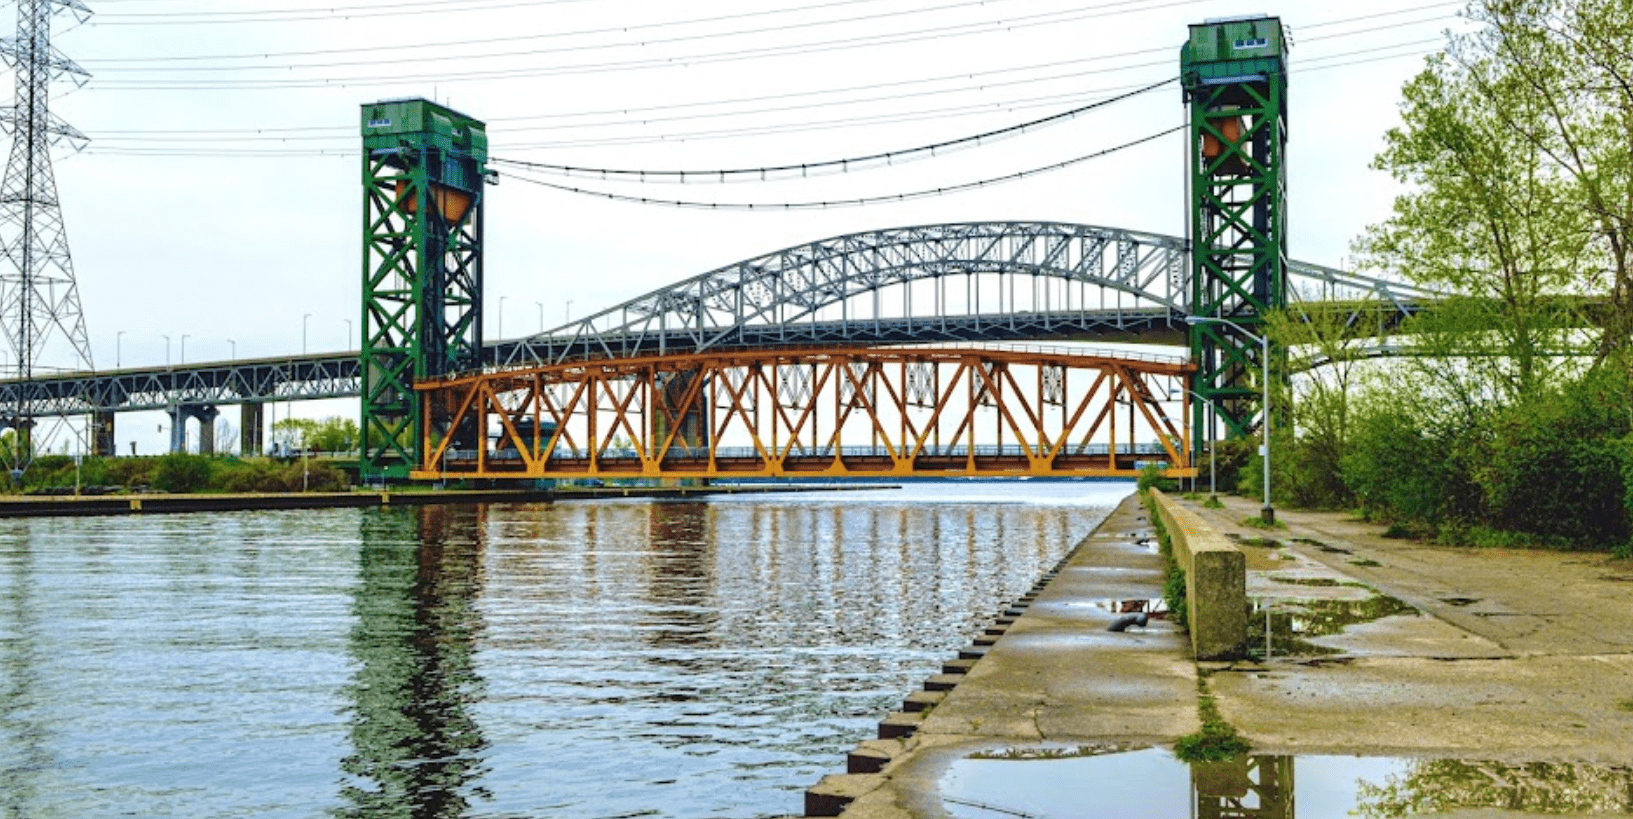 Lane closures on Burlington Canal Lift Bridge